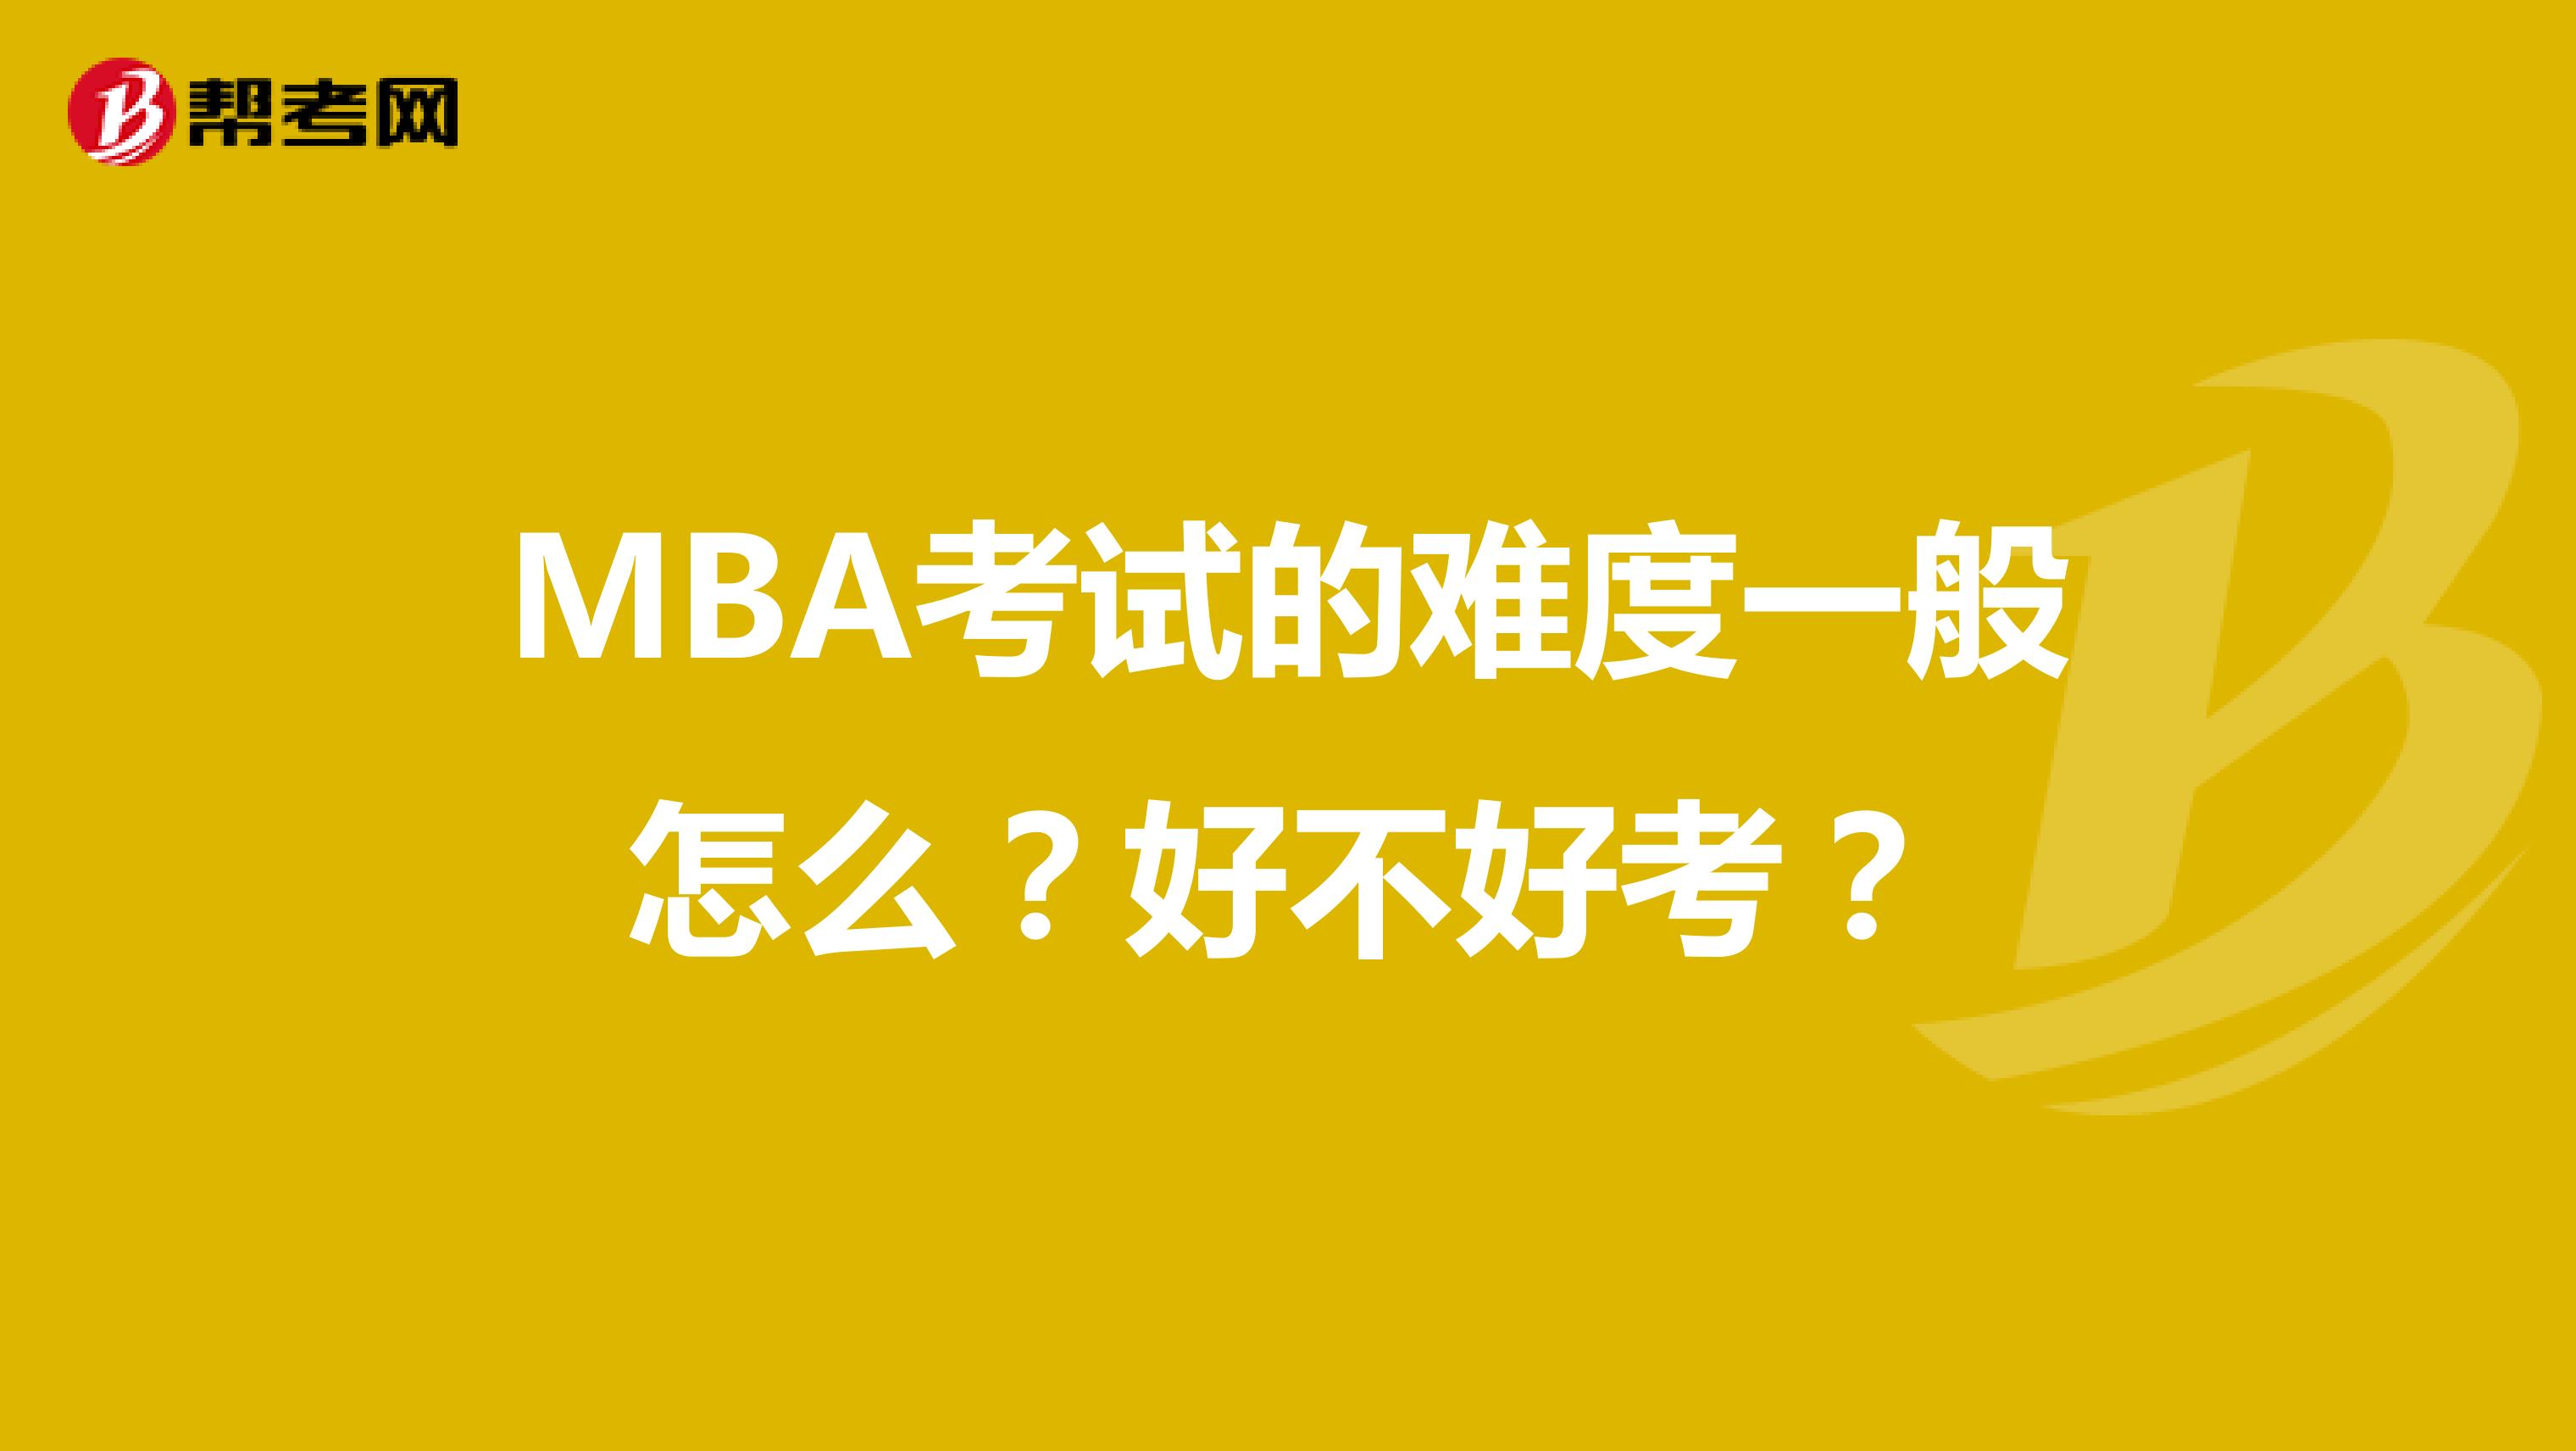 MBA考试的难度一般怎么？好不好考？